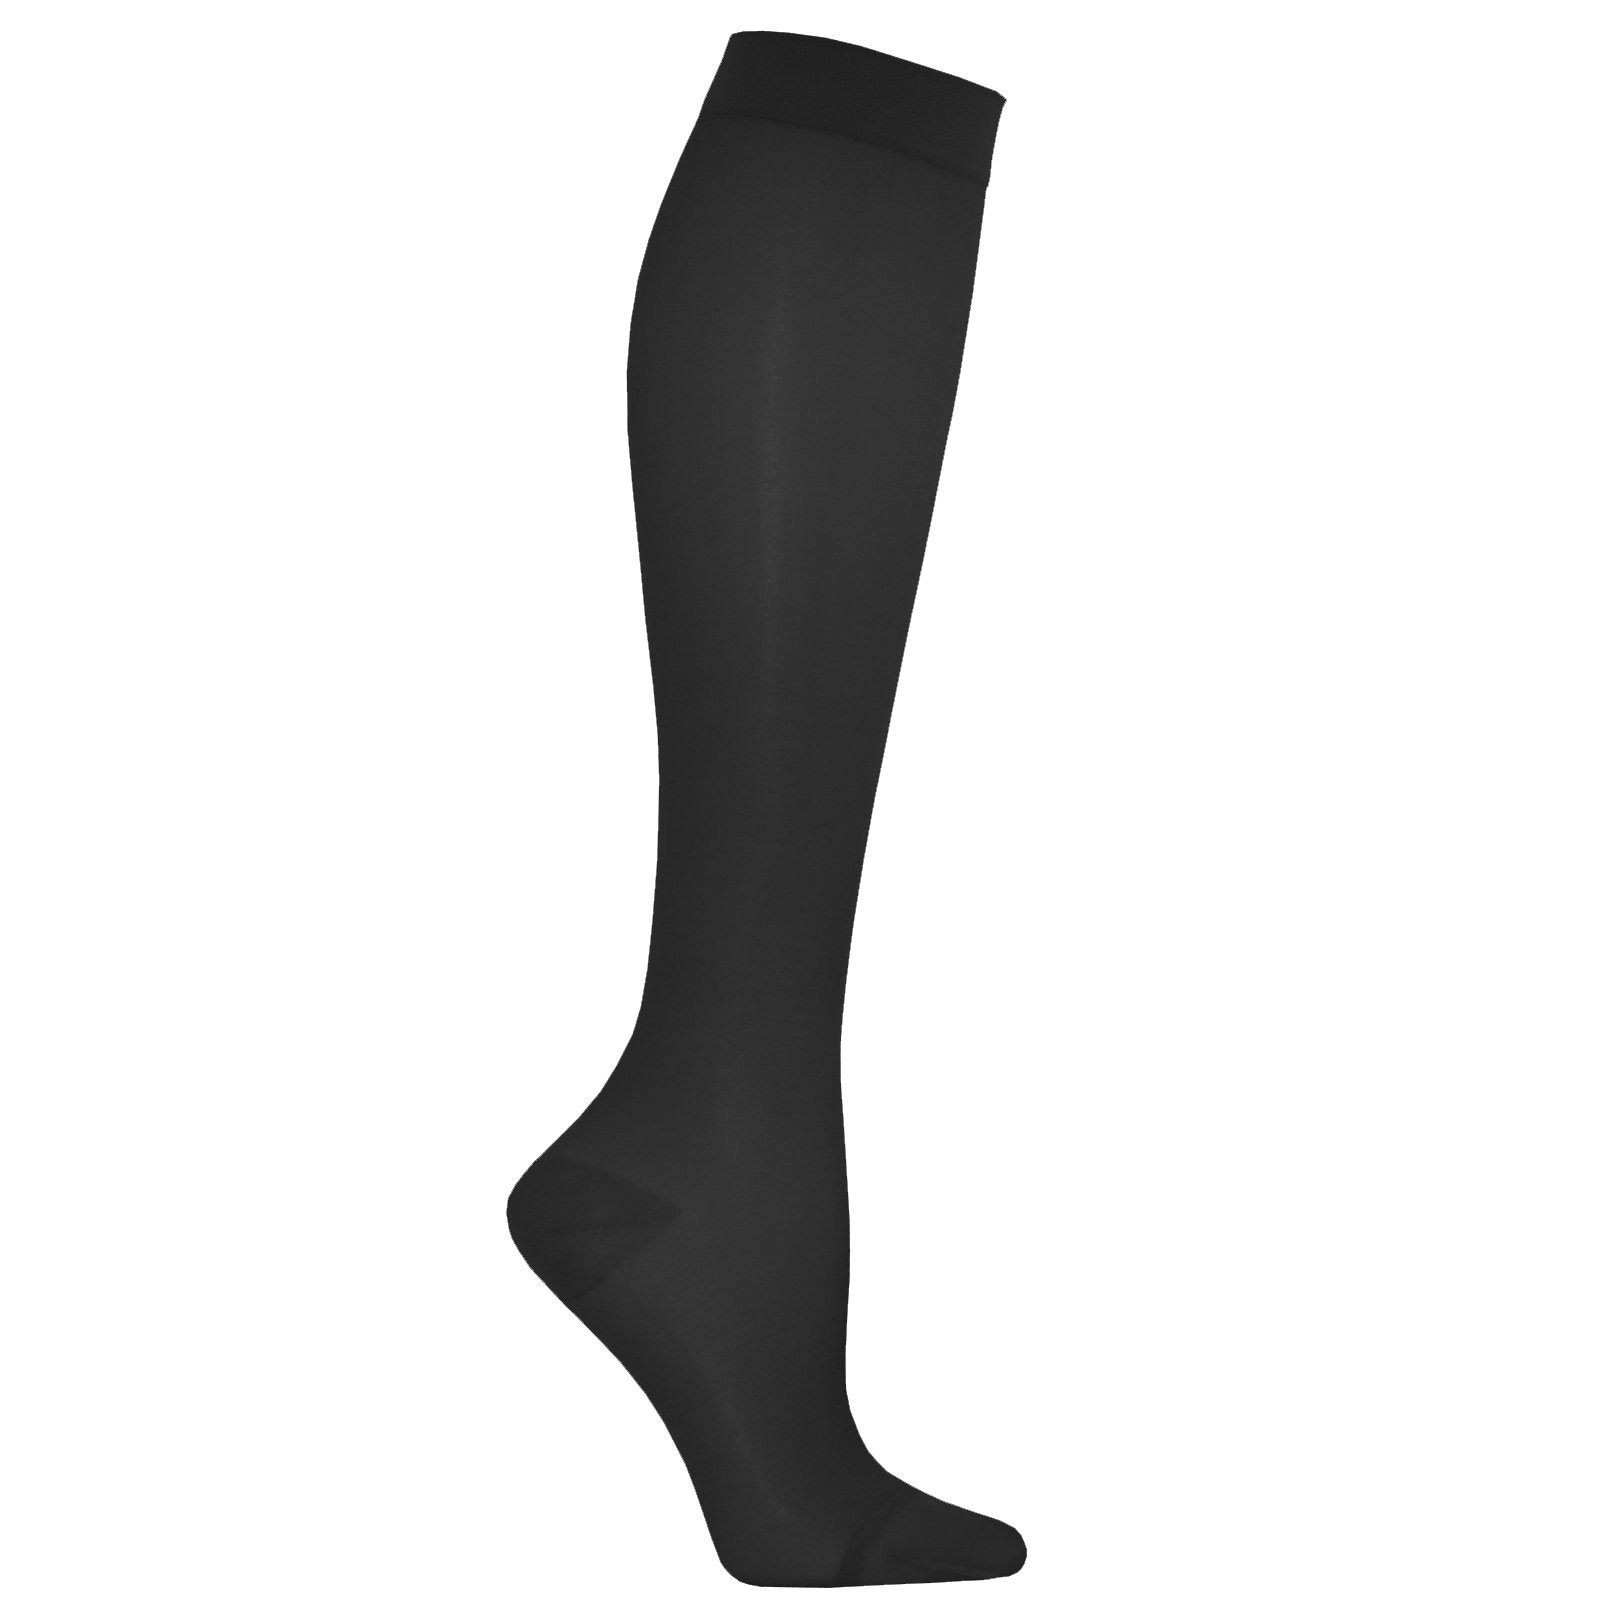 Dr Scholls Women's Compression Sock - Black, Medium